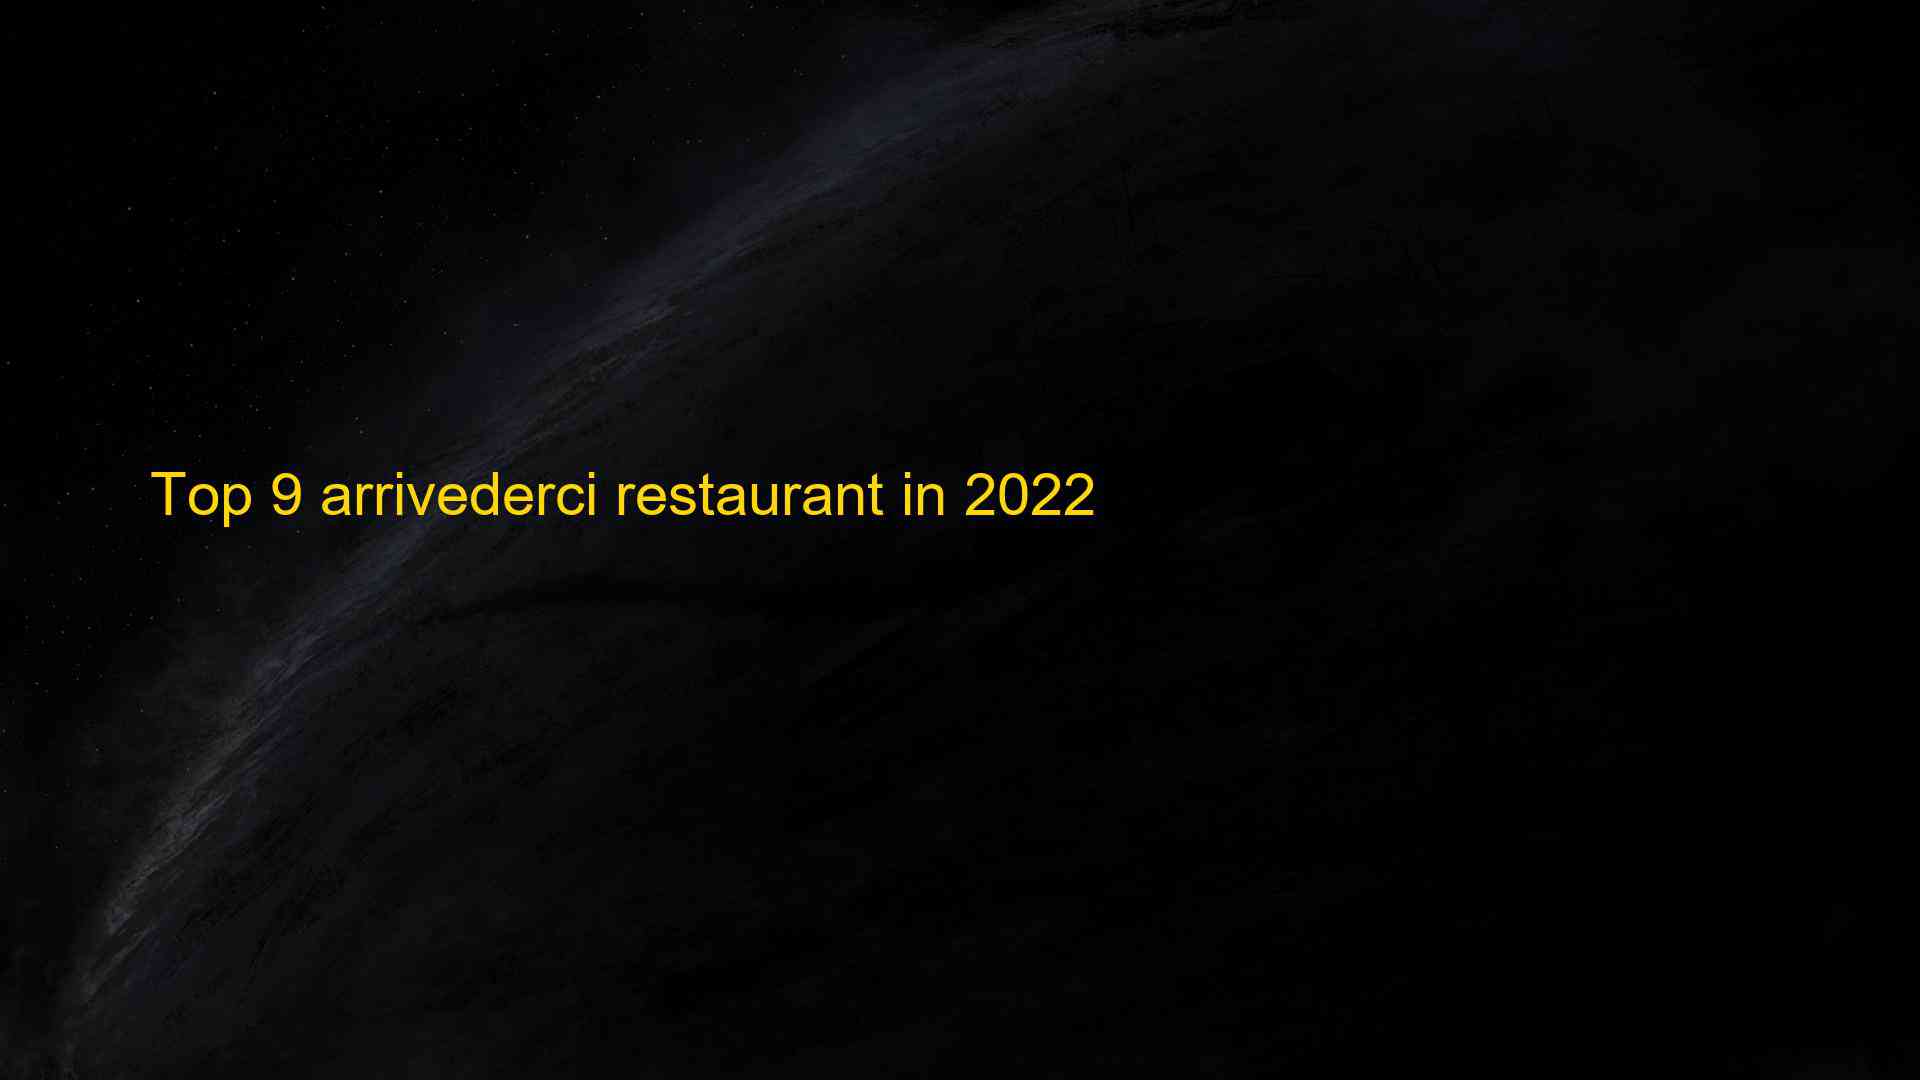 Top 9 arrivederci restaurant in 2022 1662870851